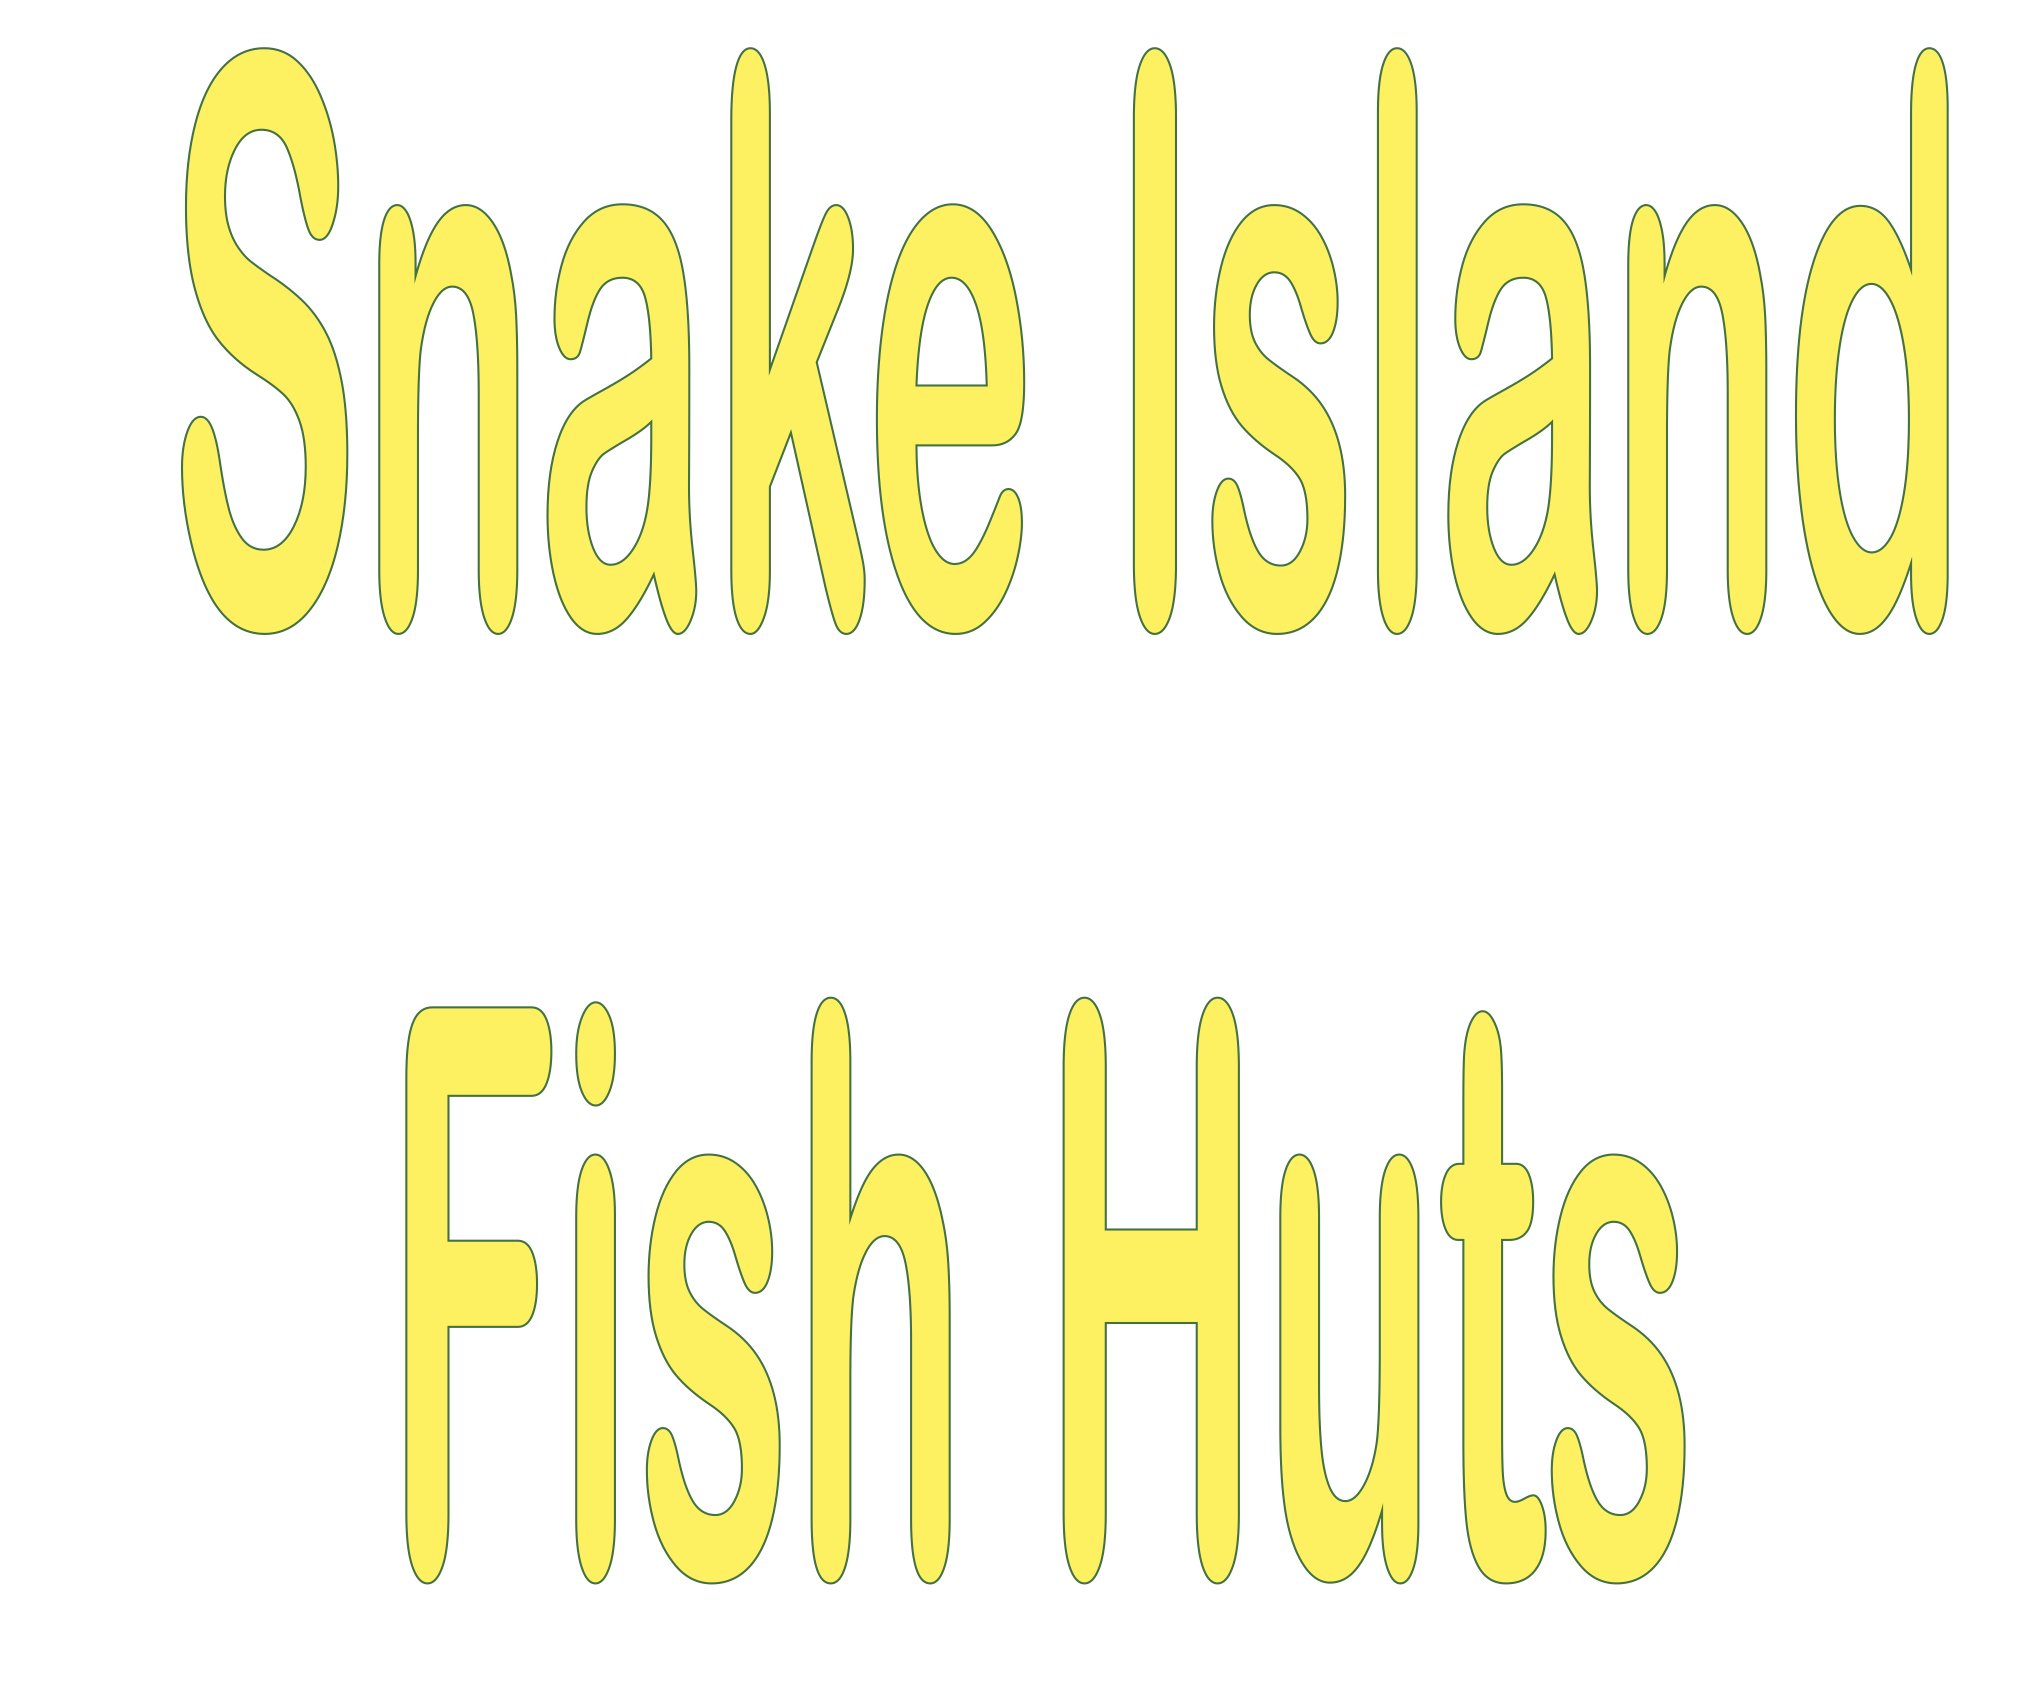 Snake Island Fish Huts